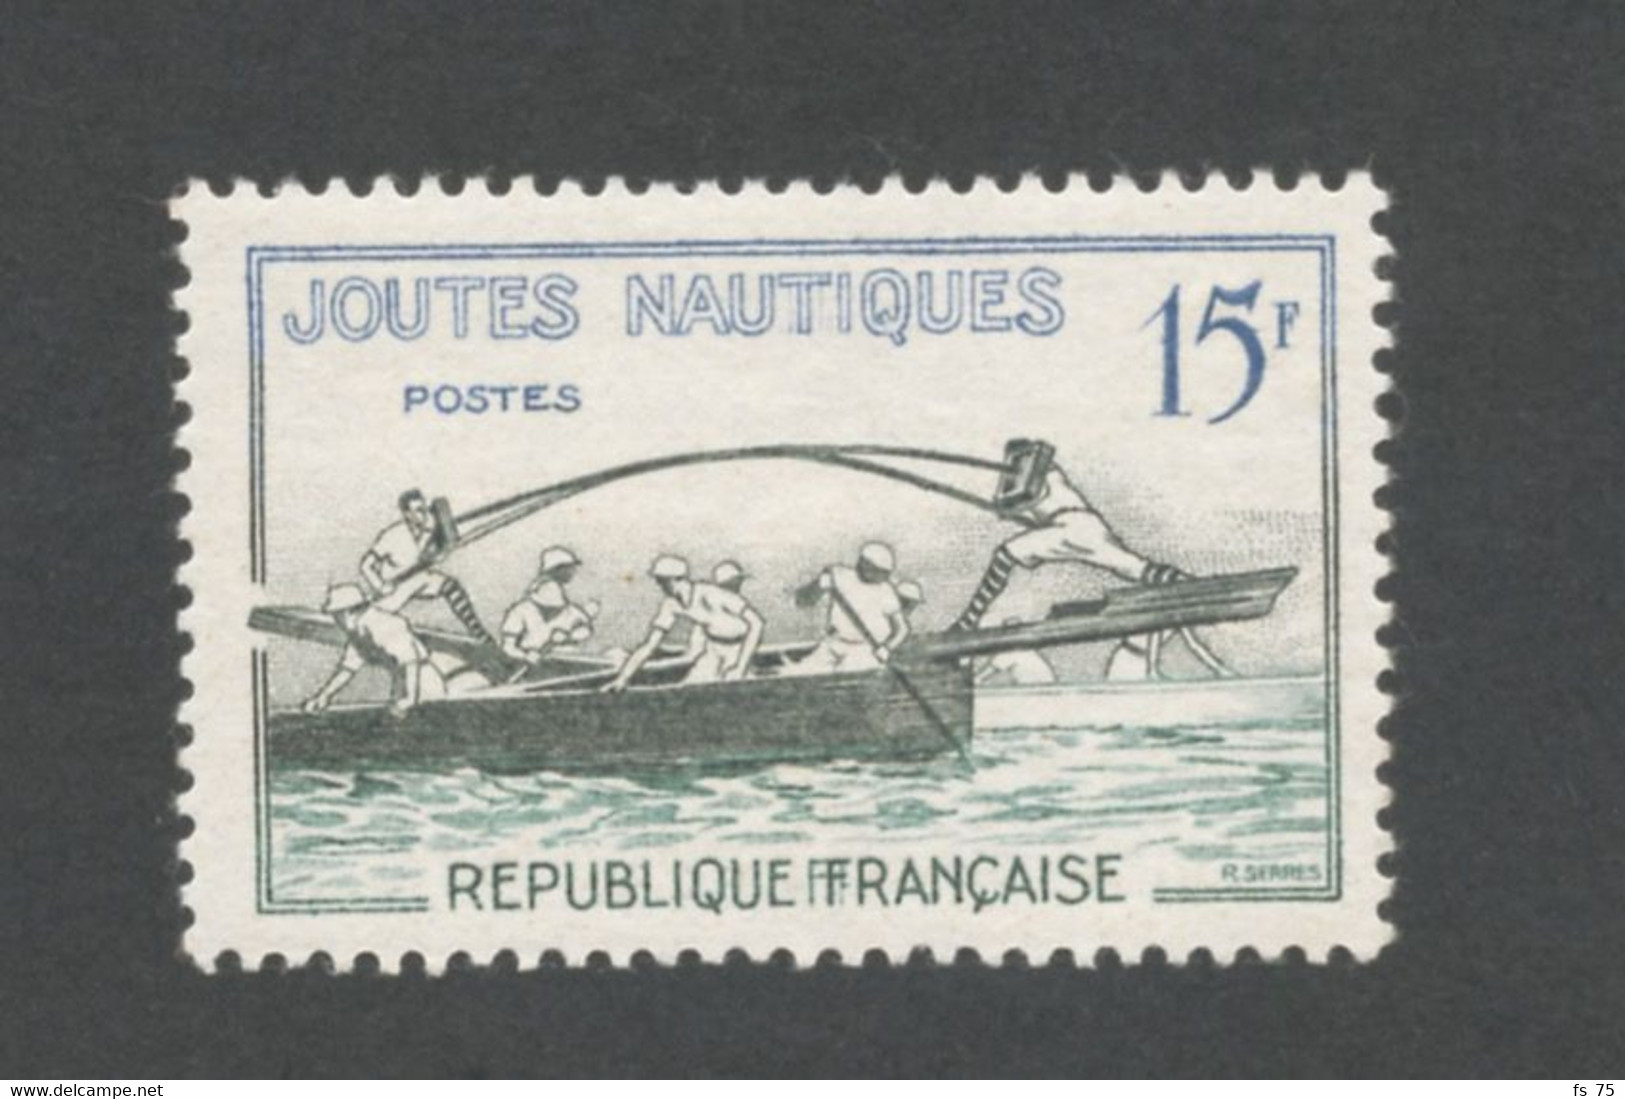 FRANCE - N°1162  15F JOUTES NAUTIQUES - DOUBLE F A FRANCAISE - NEUF SANS CHARNIERE - Neufs